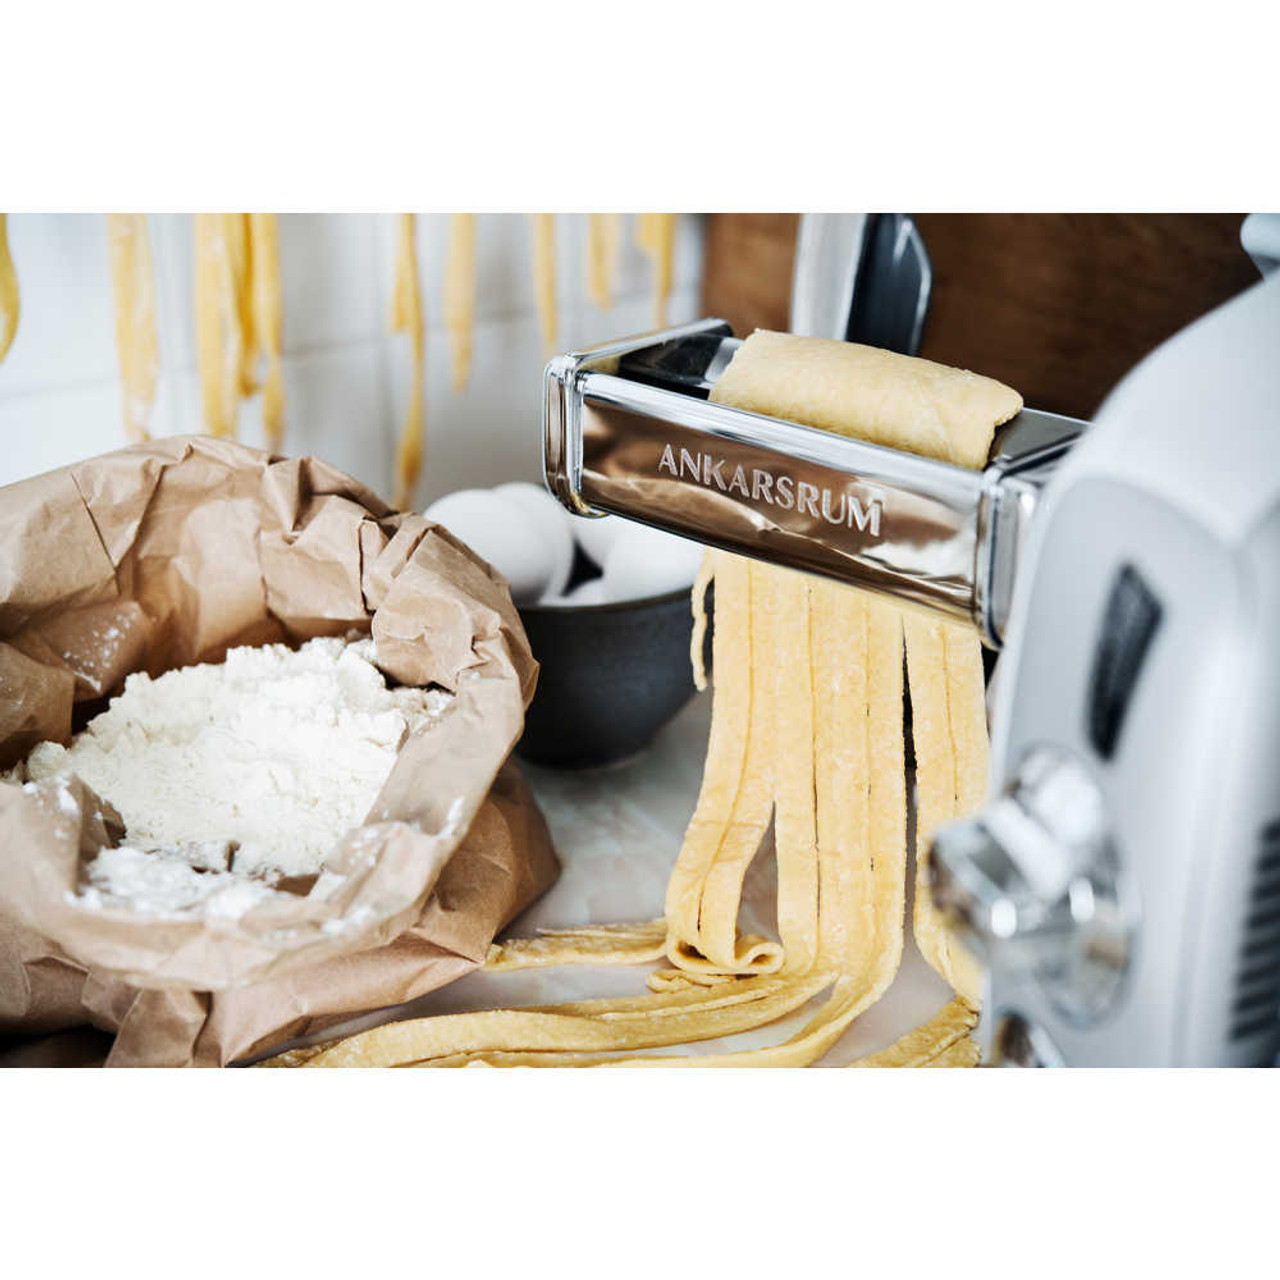 Ankarsrum Lasagna Pasta Roller Attachment - King Arthur Baking Company